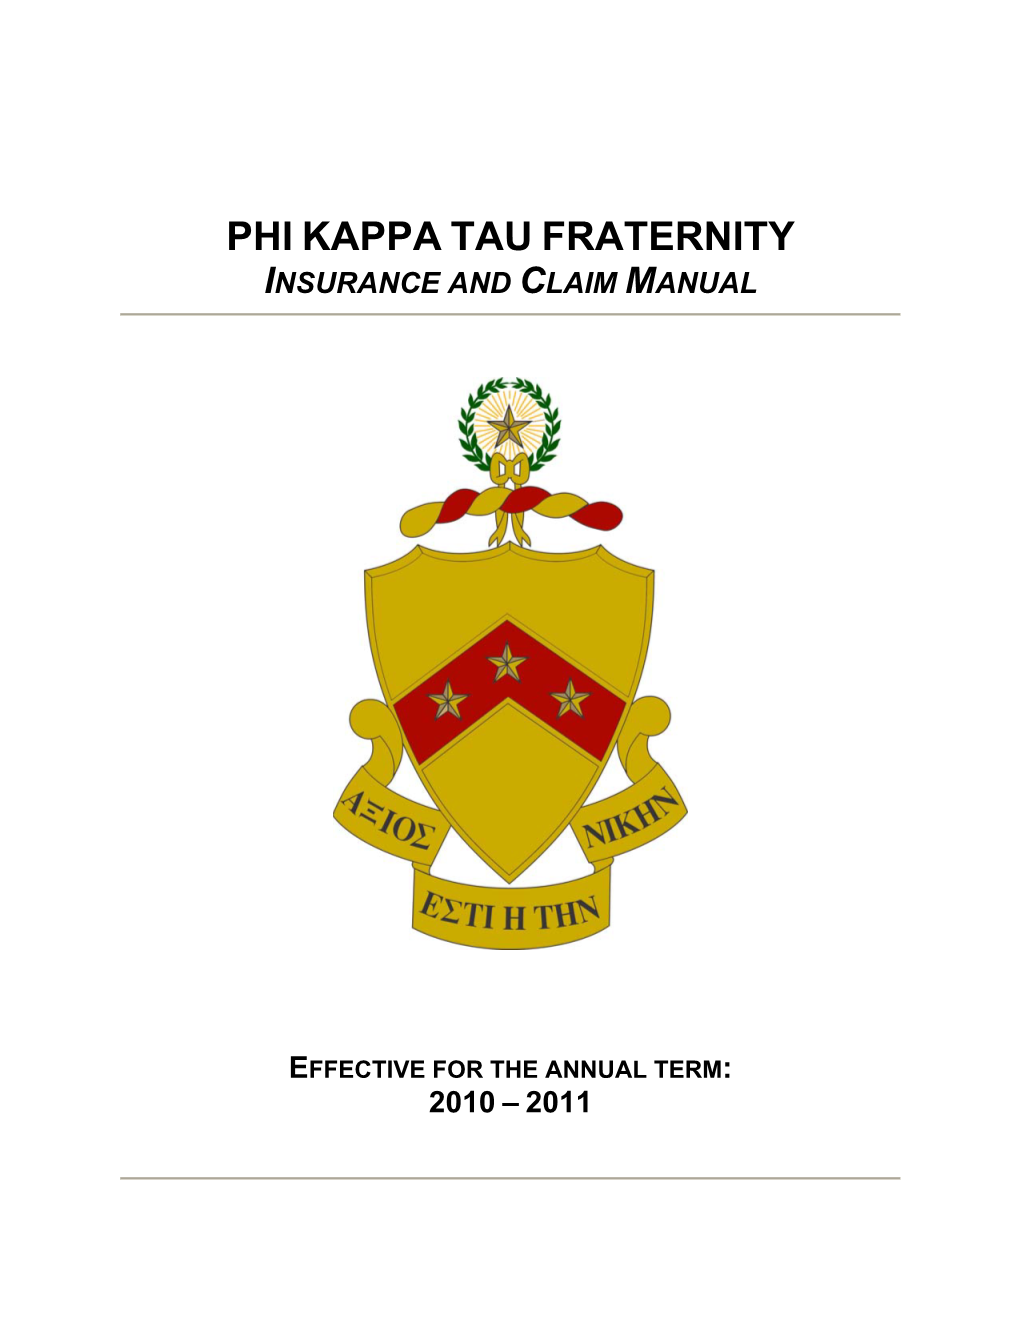 Phi Kappa Tau Fraternity Insurance and Claim Manual